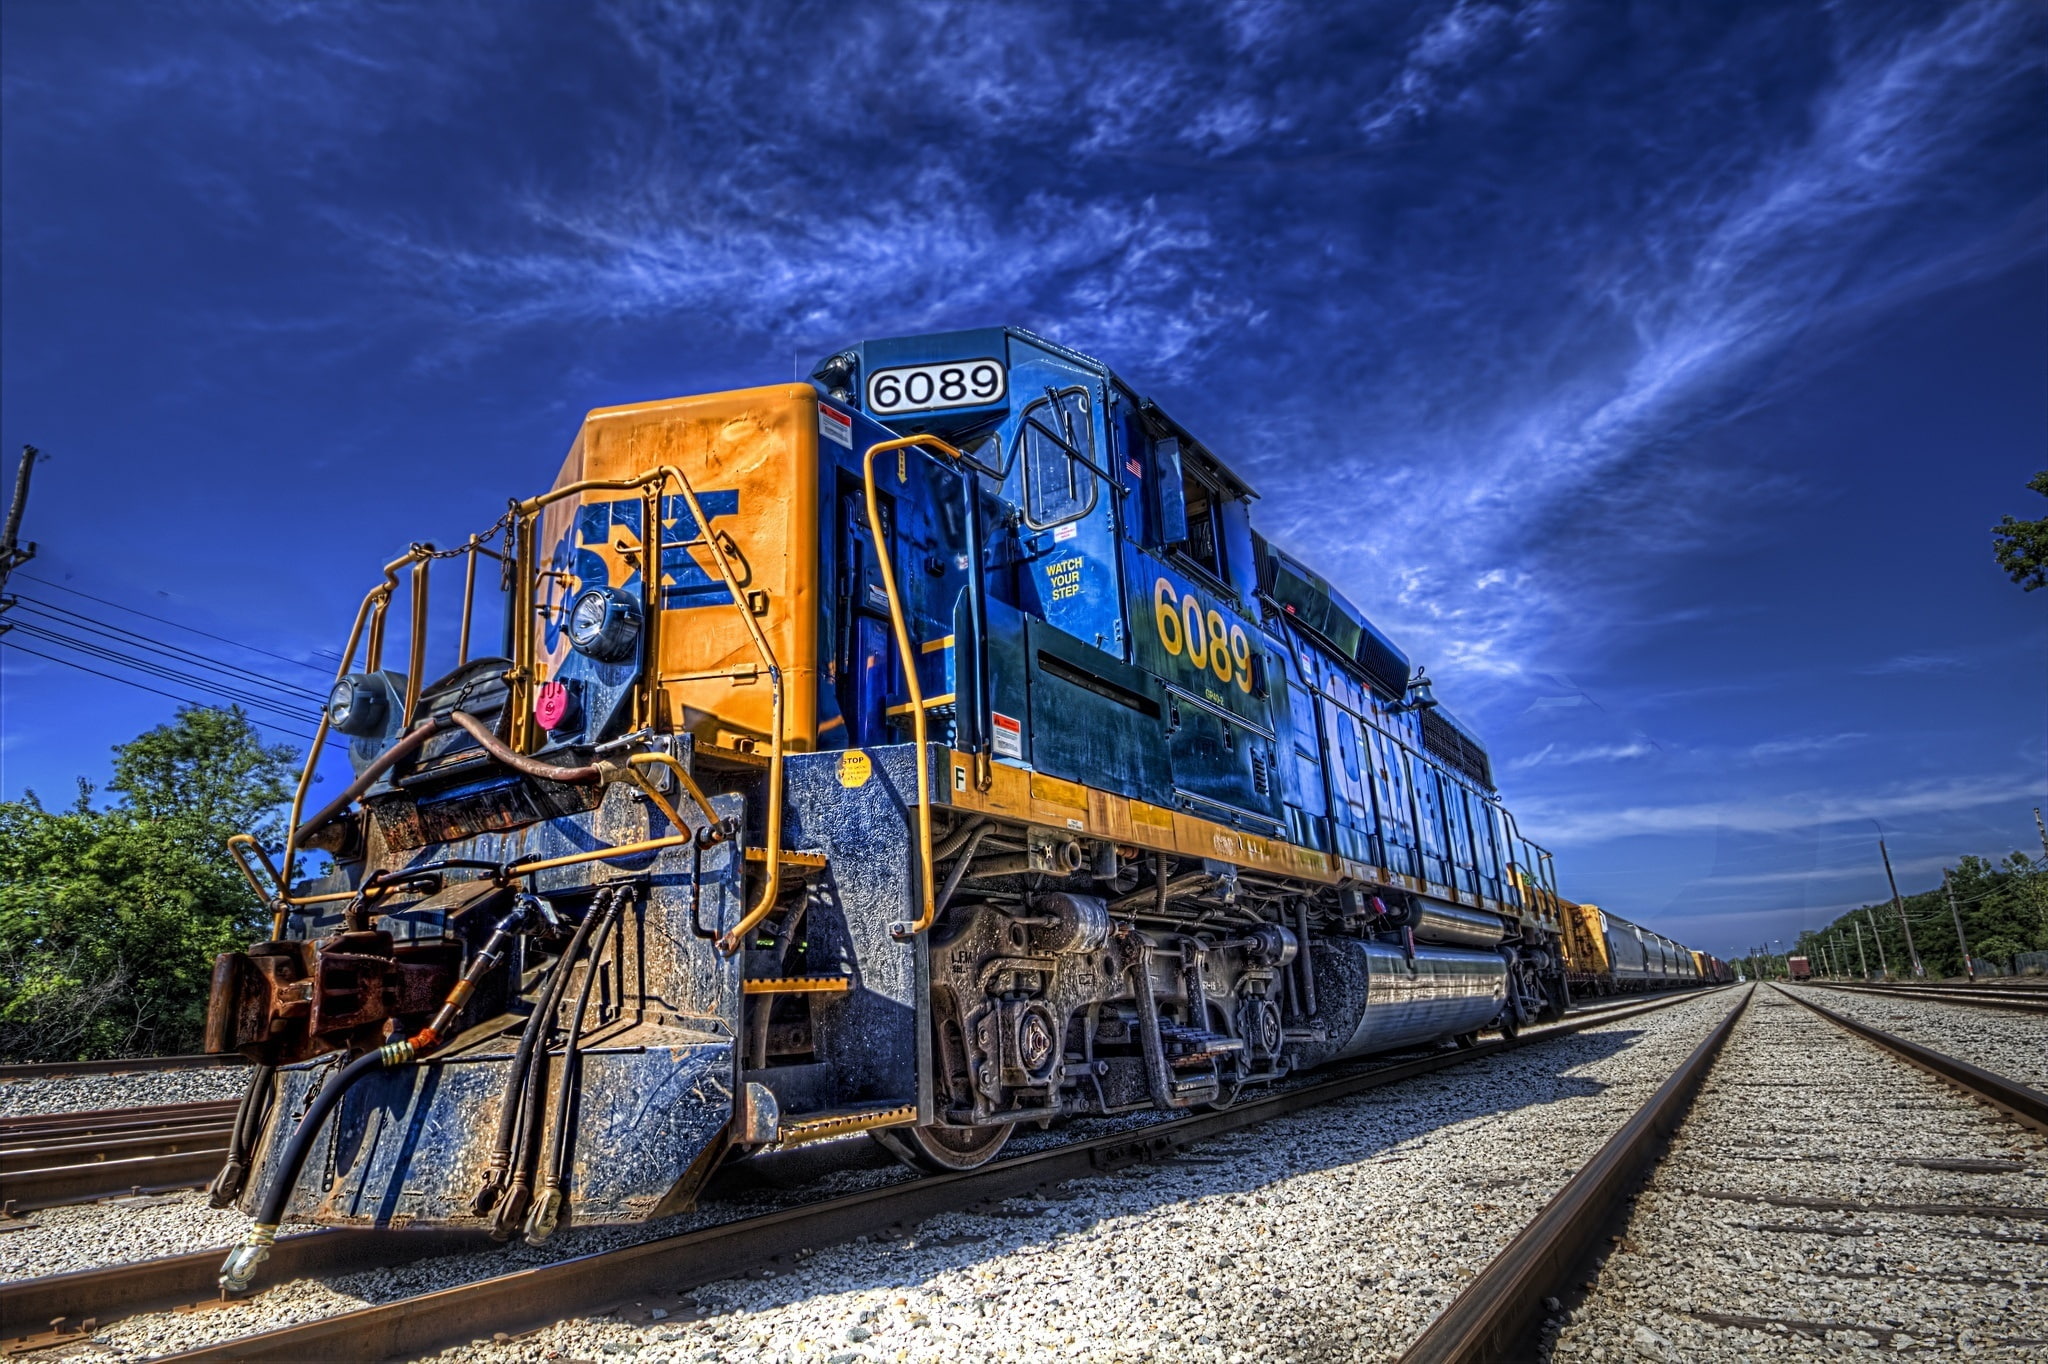 locomotive, vehicle, train, rail transportation, sky, track